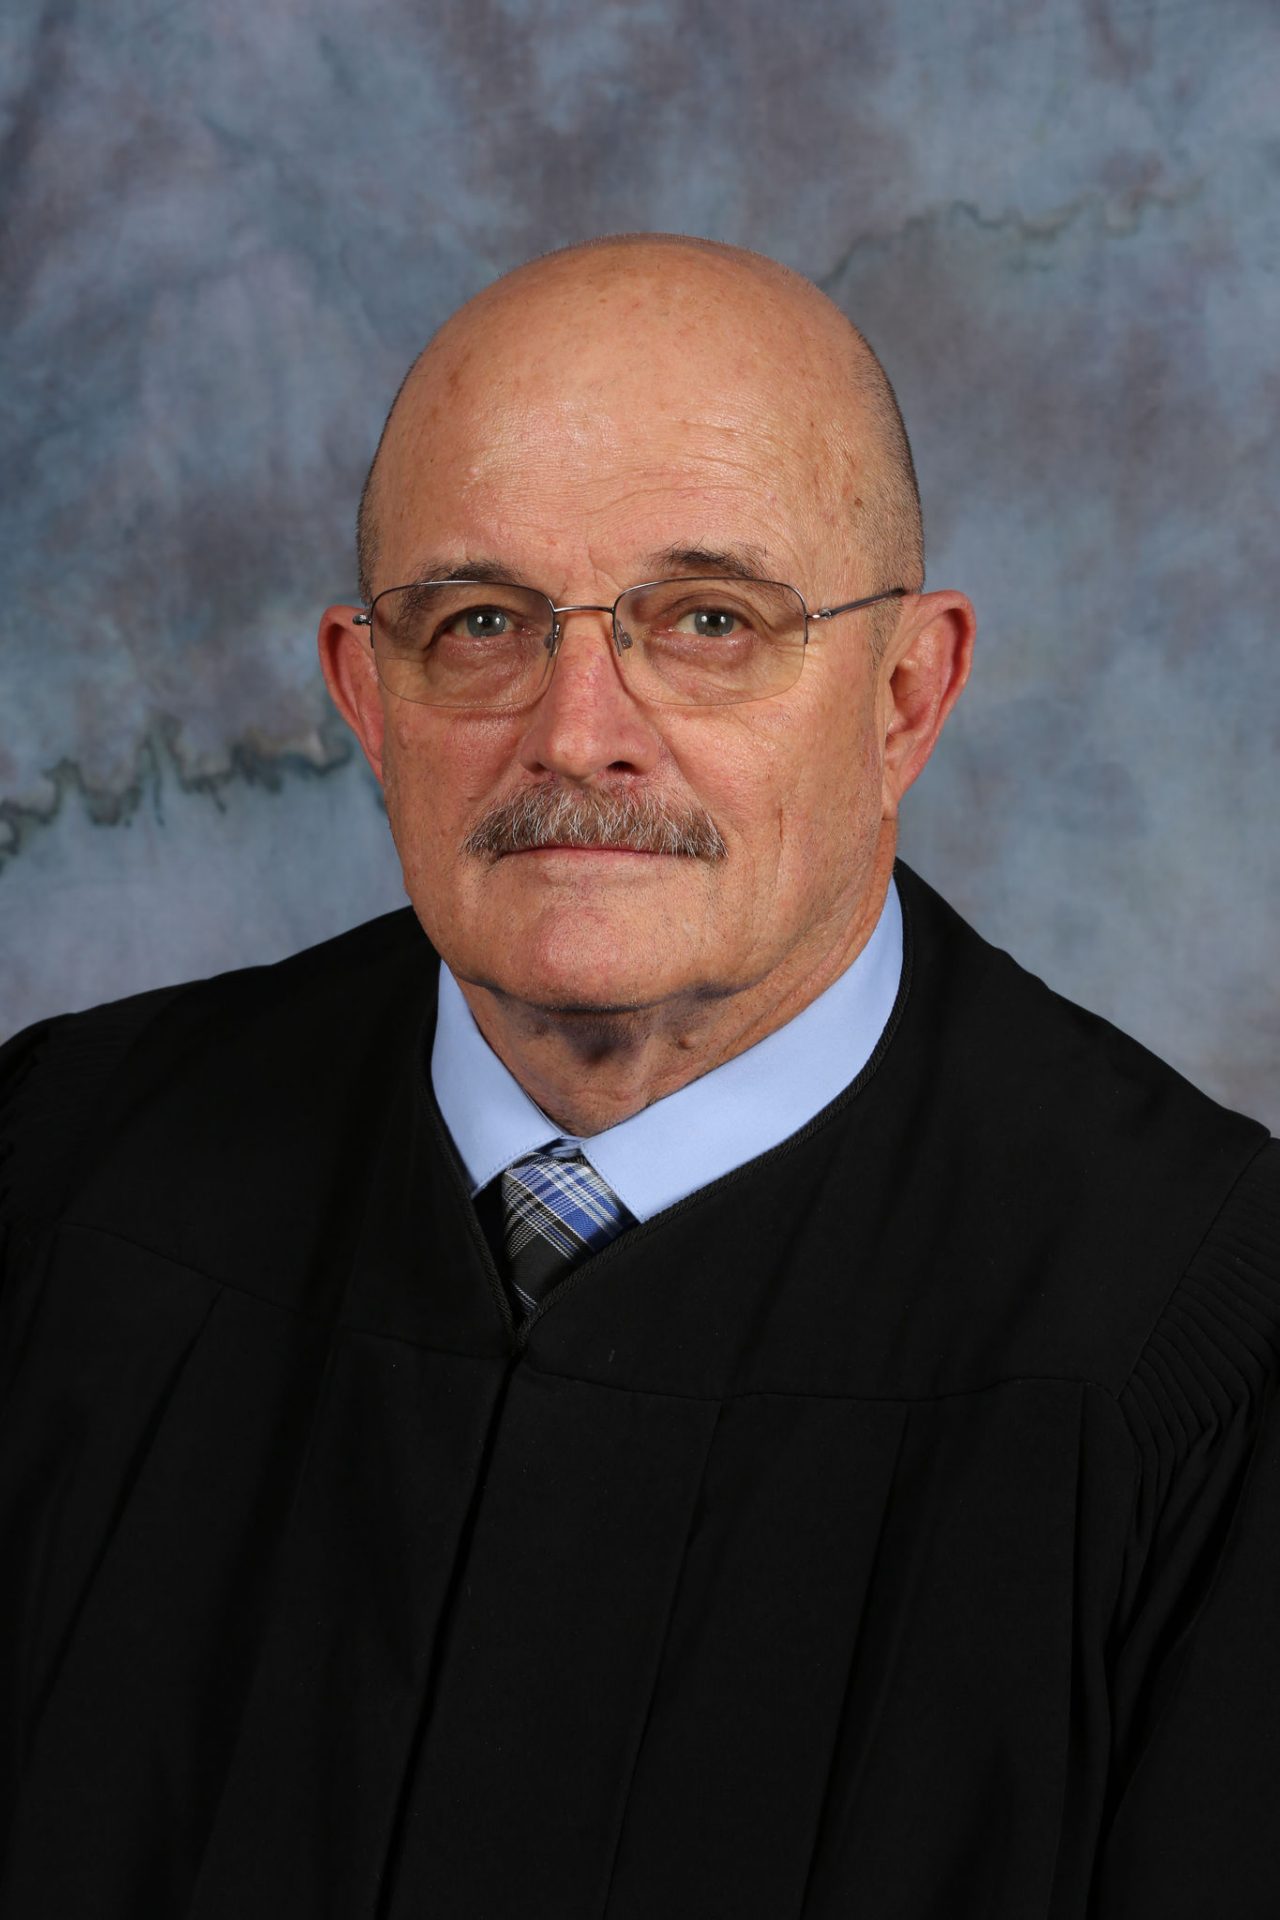 JUDGE RONALD E. POWELL